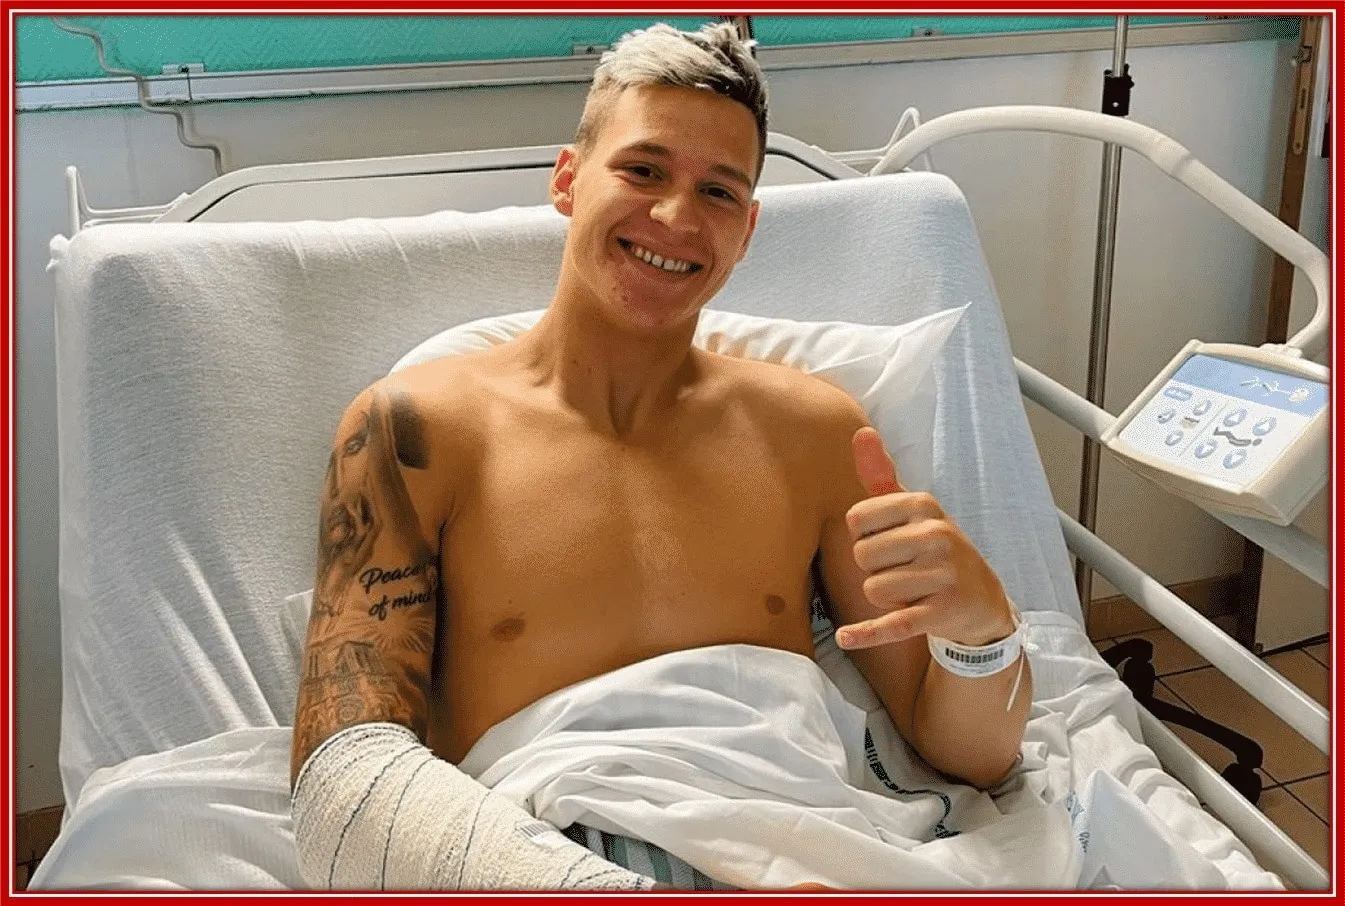 A picture of Fabio Quartararo after a successful arm pump surgery.